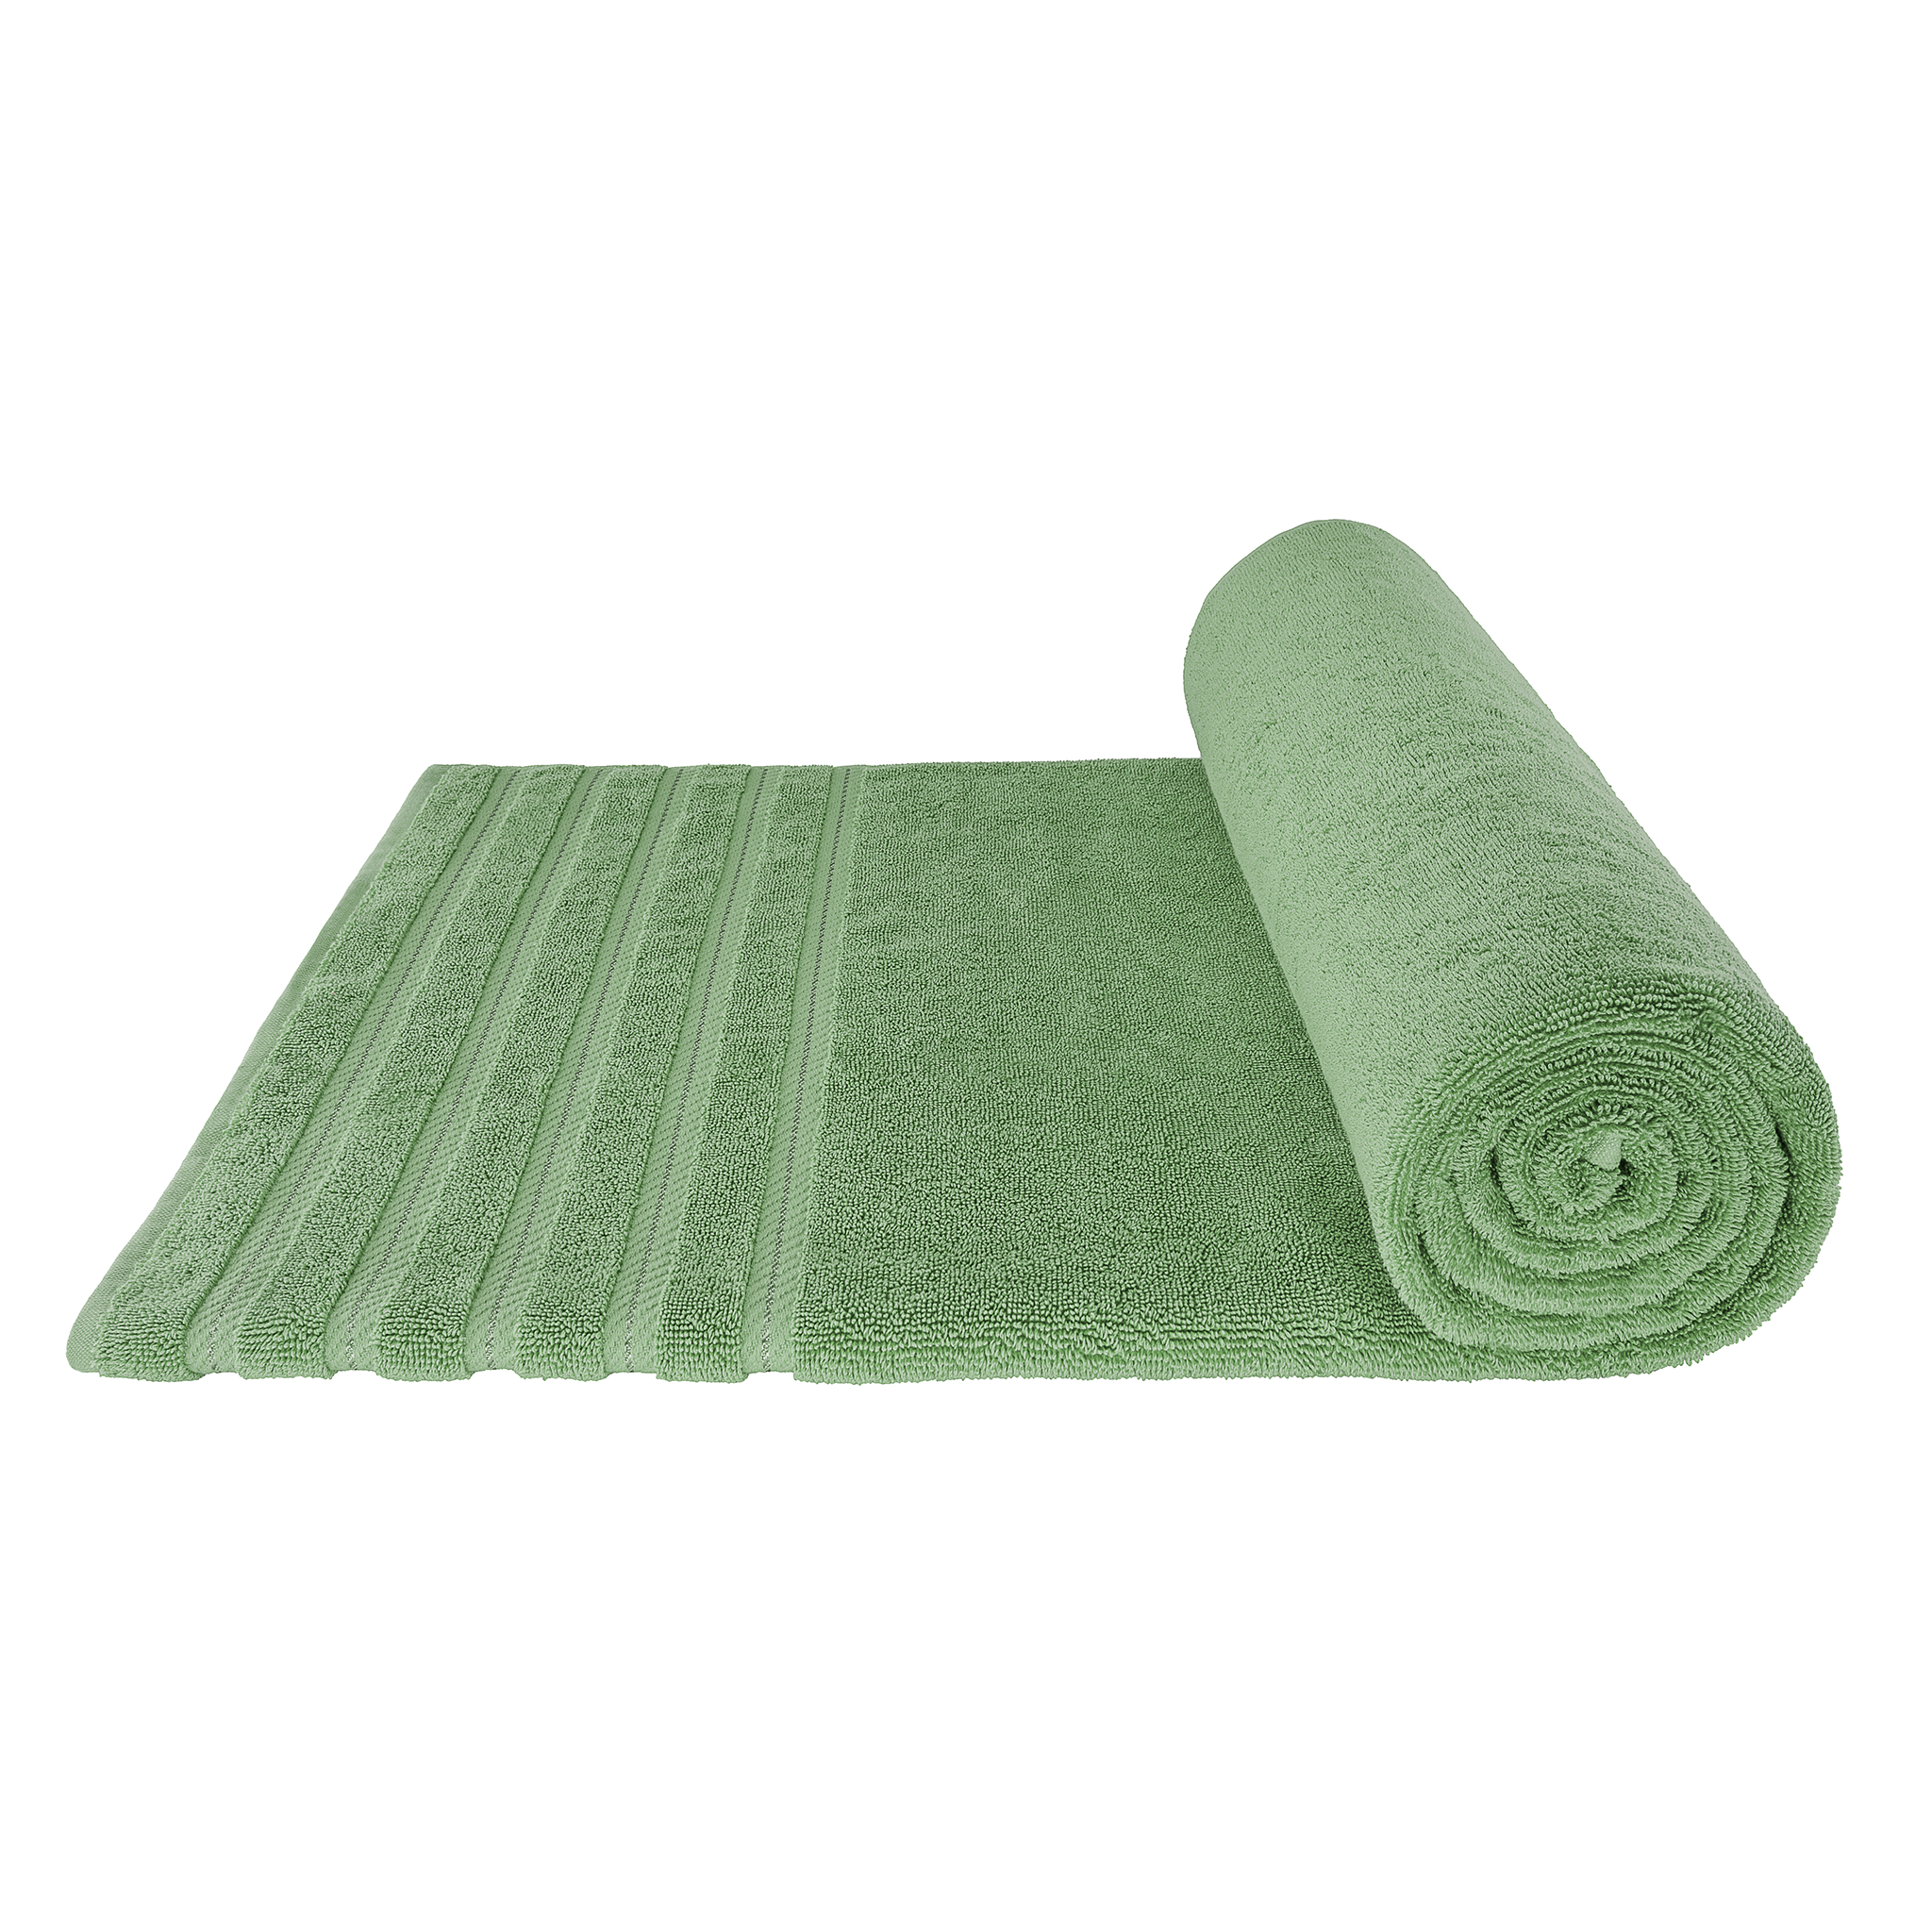 American Soft Linen - 35x70 Jumbo Bath Sheet Turkish Bath Towel - 16 Piece Case Pack - Sage-Green - 6